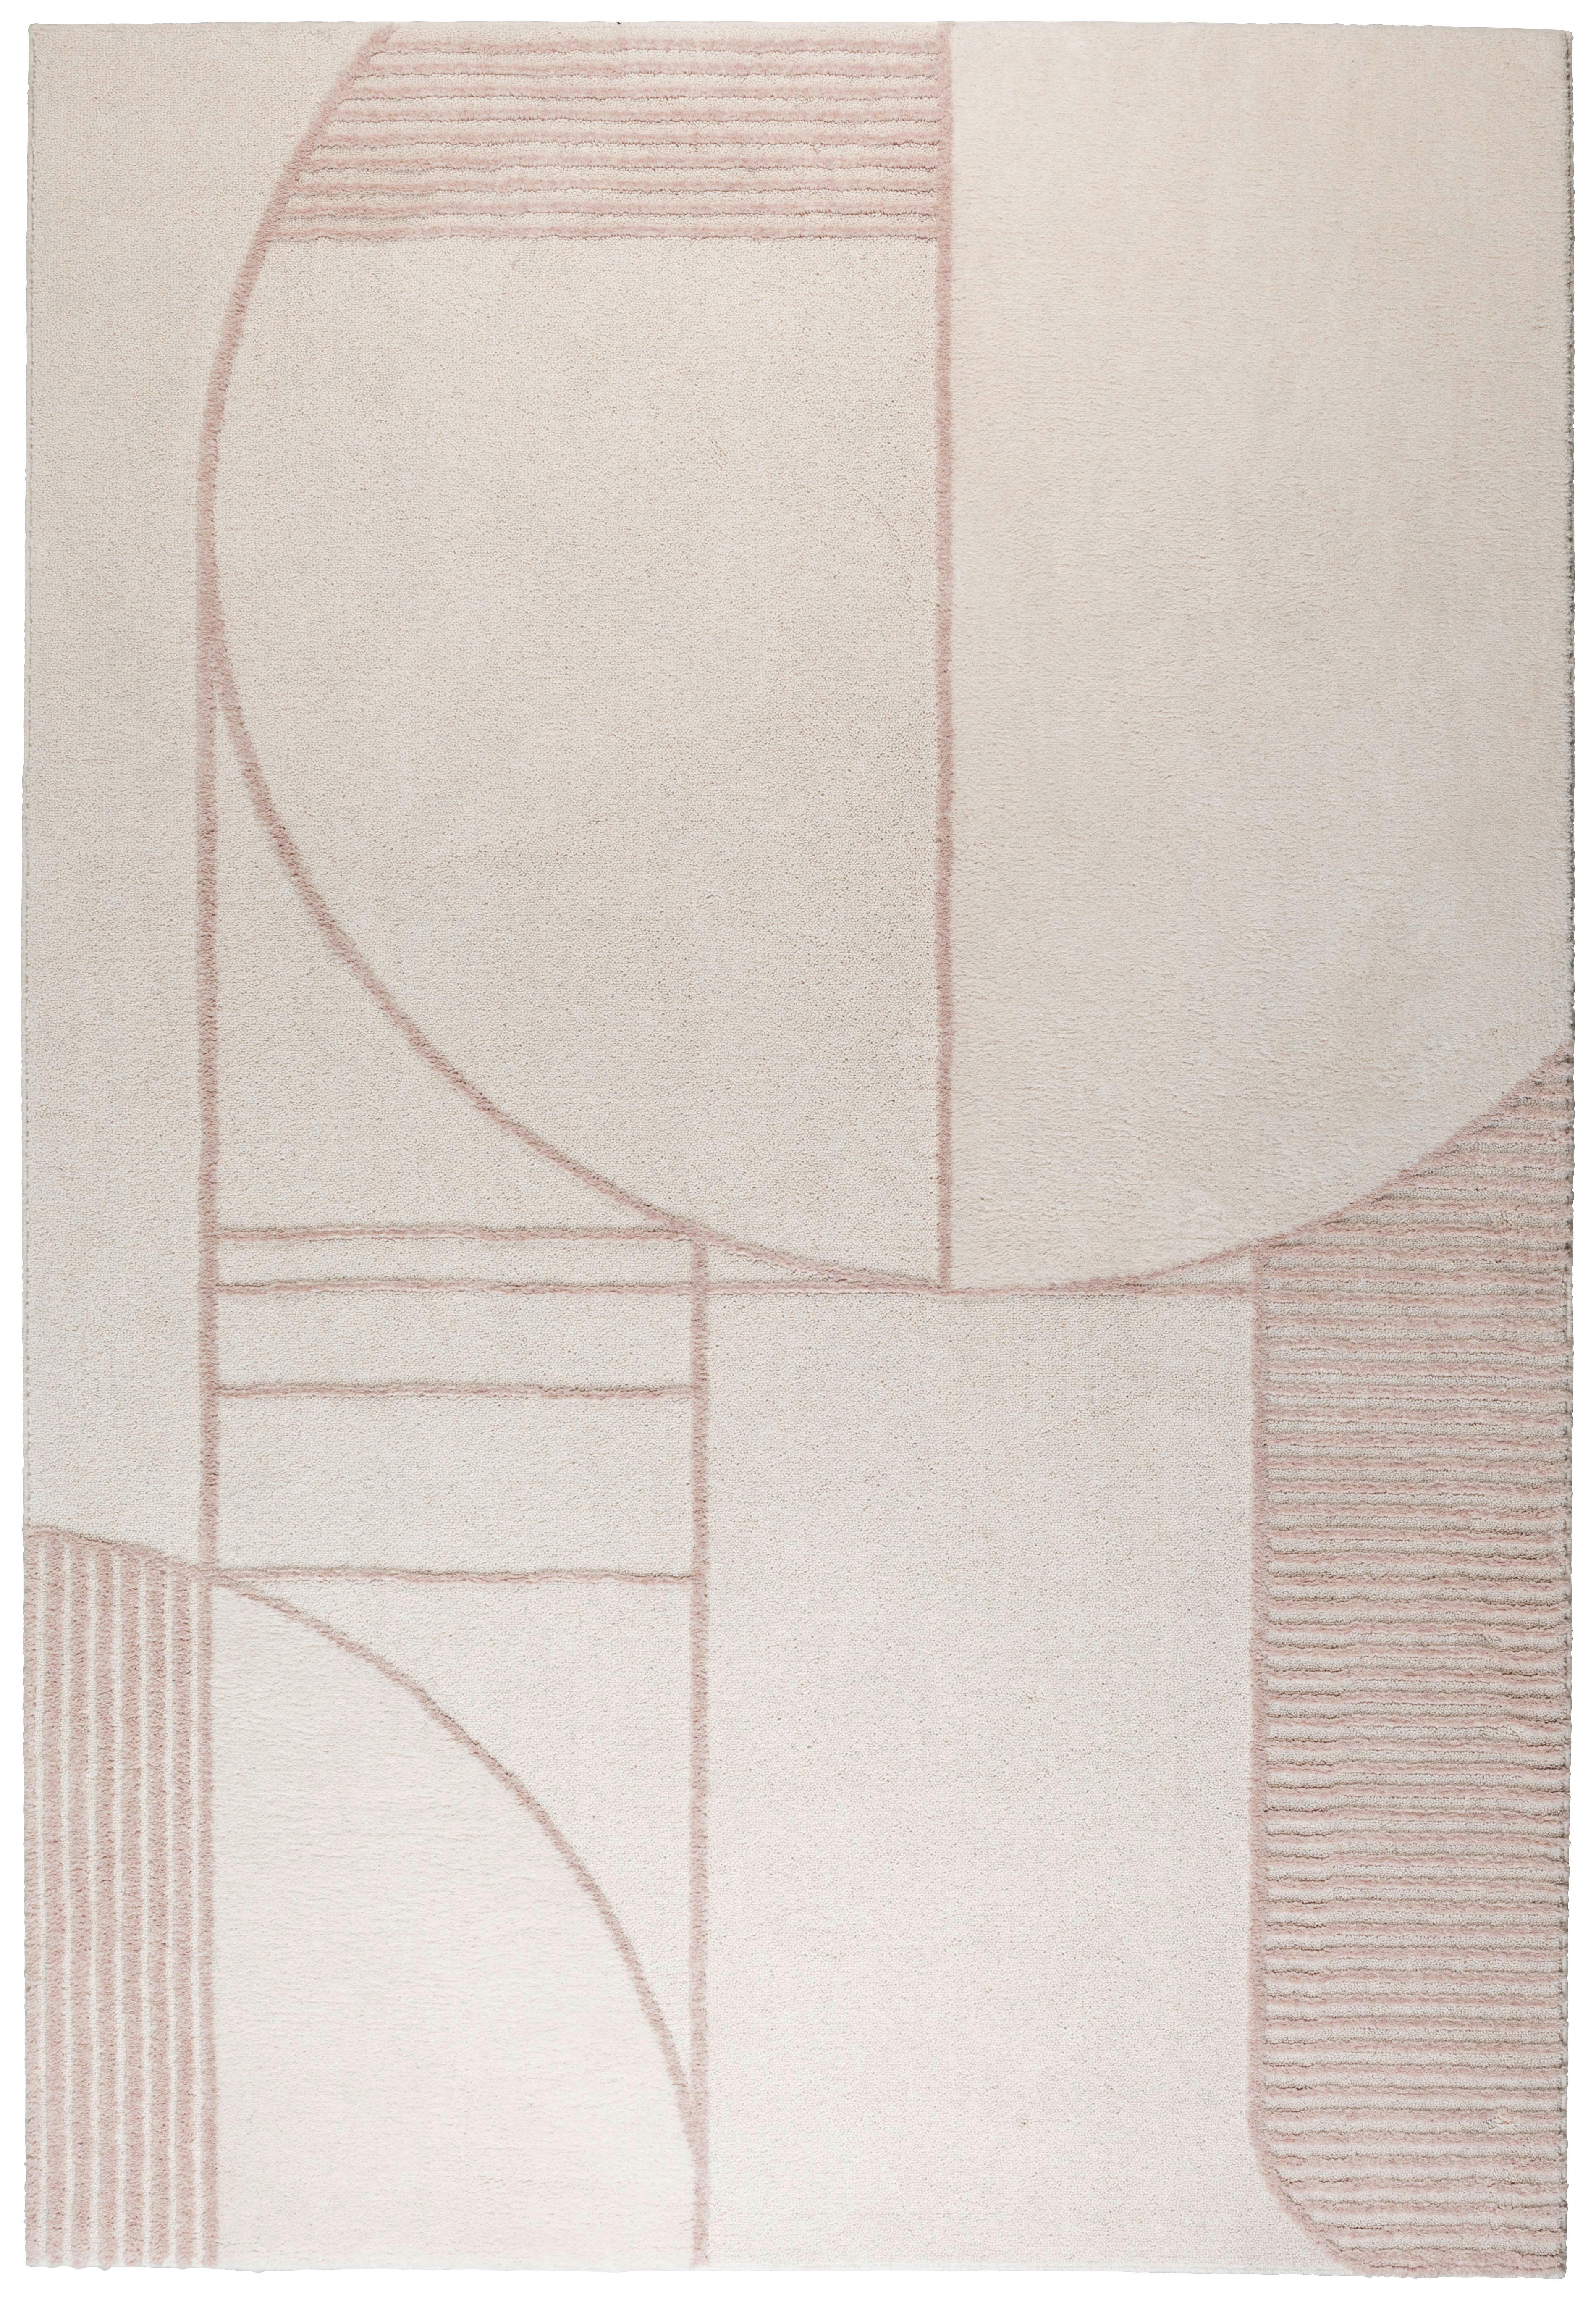 TEPPICH 160/230 cm  - Beige/Rosa, Trend, Textil (160/230cm) - Zuiver